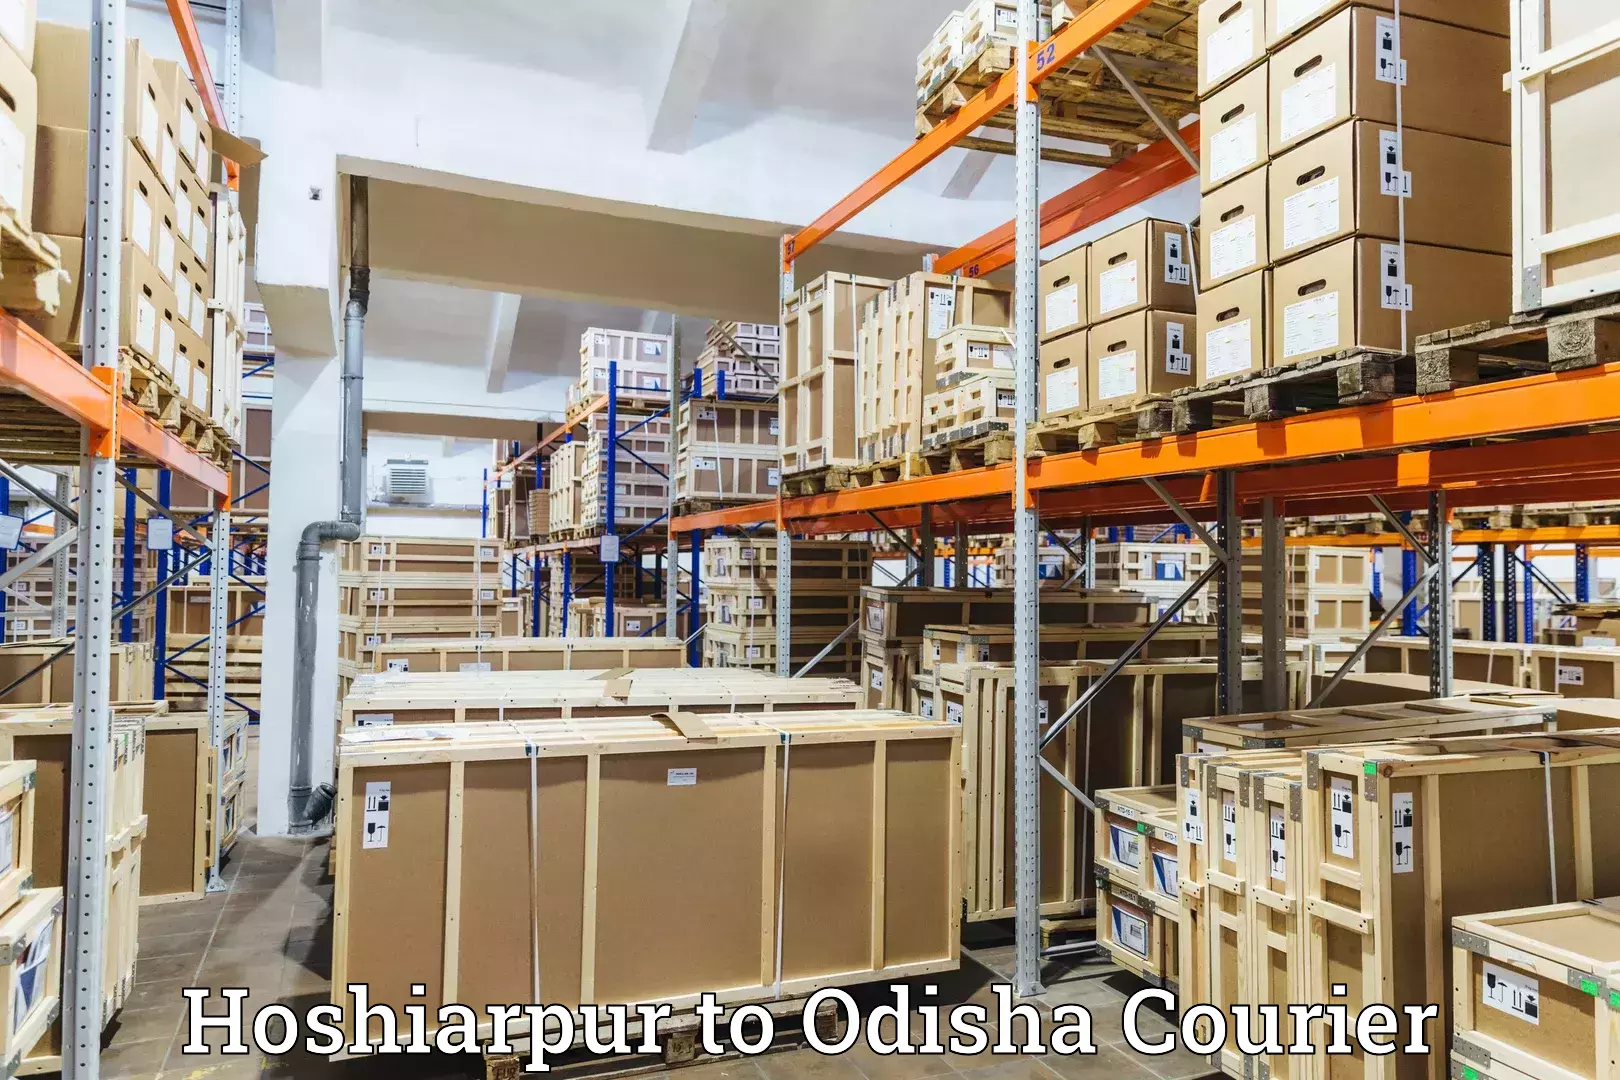 User-friendly courier app Hoshiarpur to Bonth